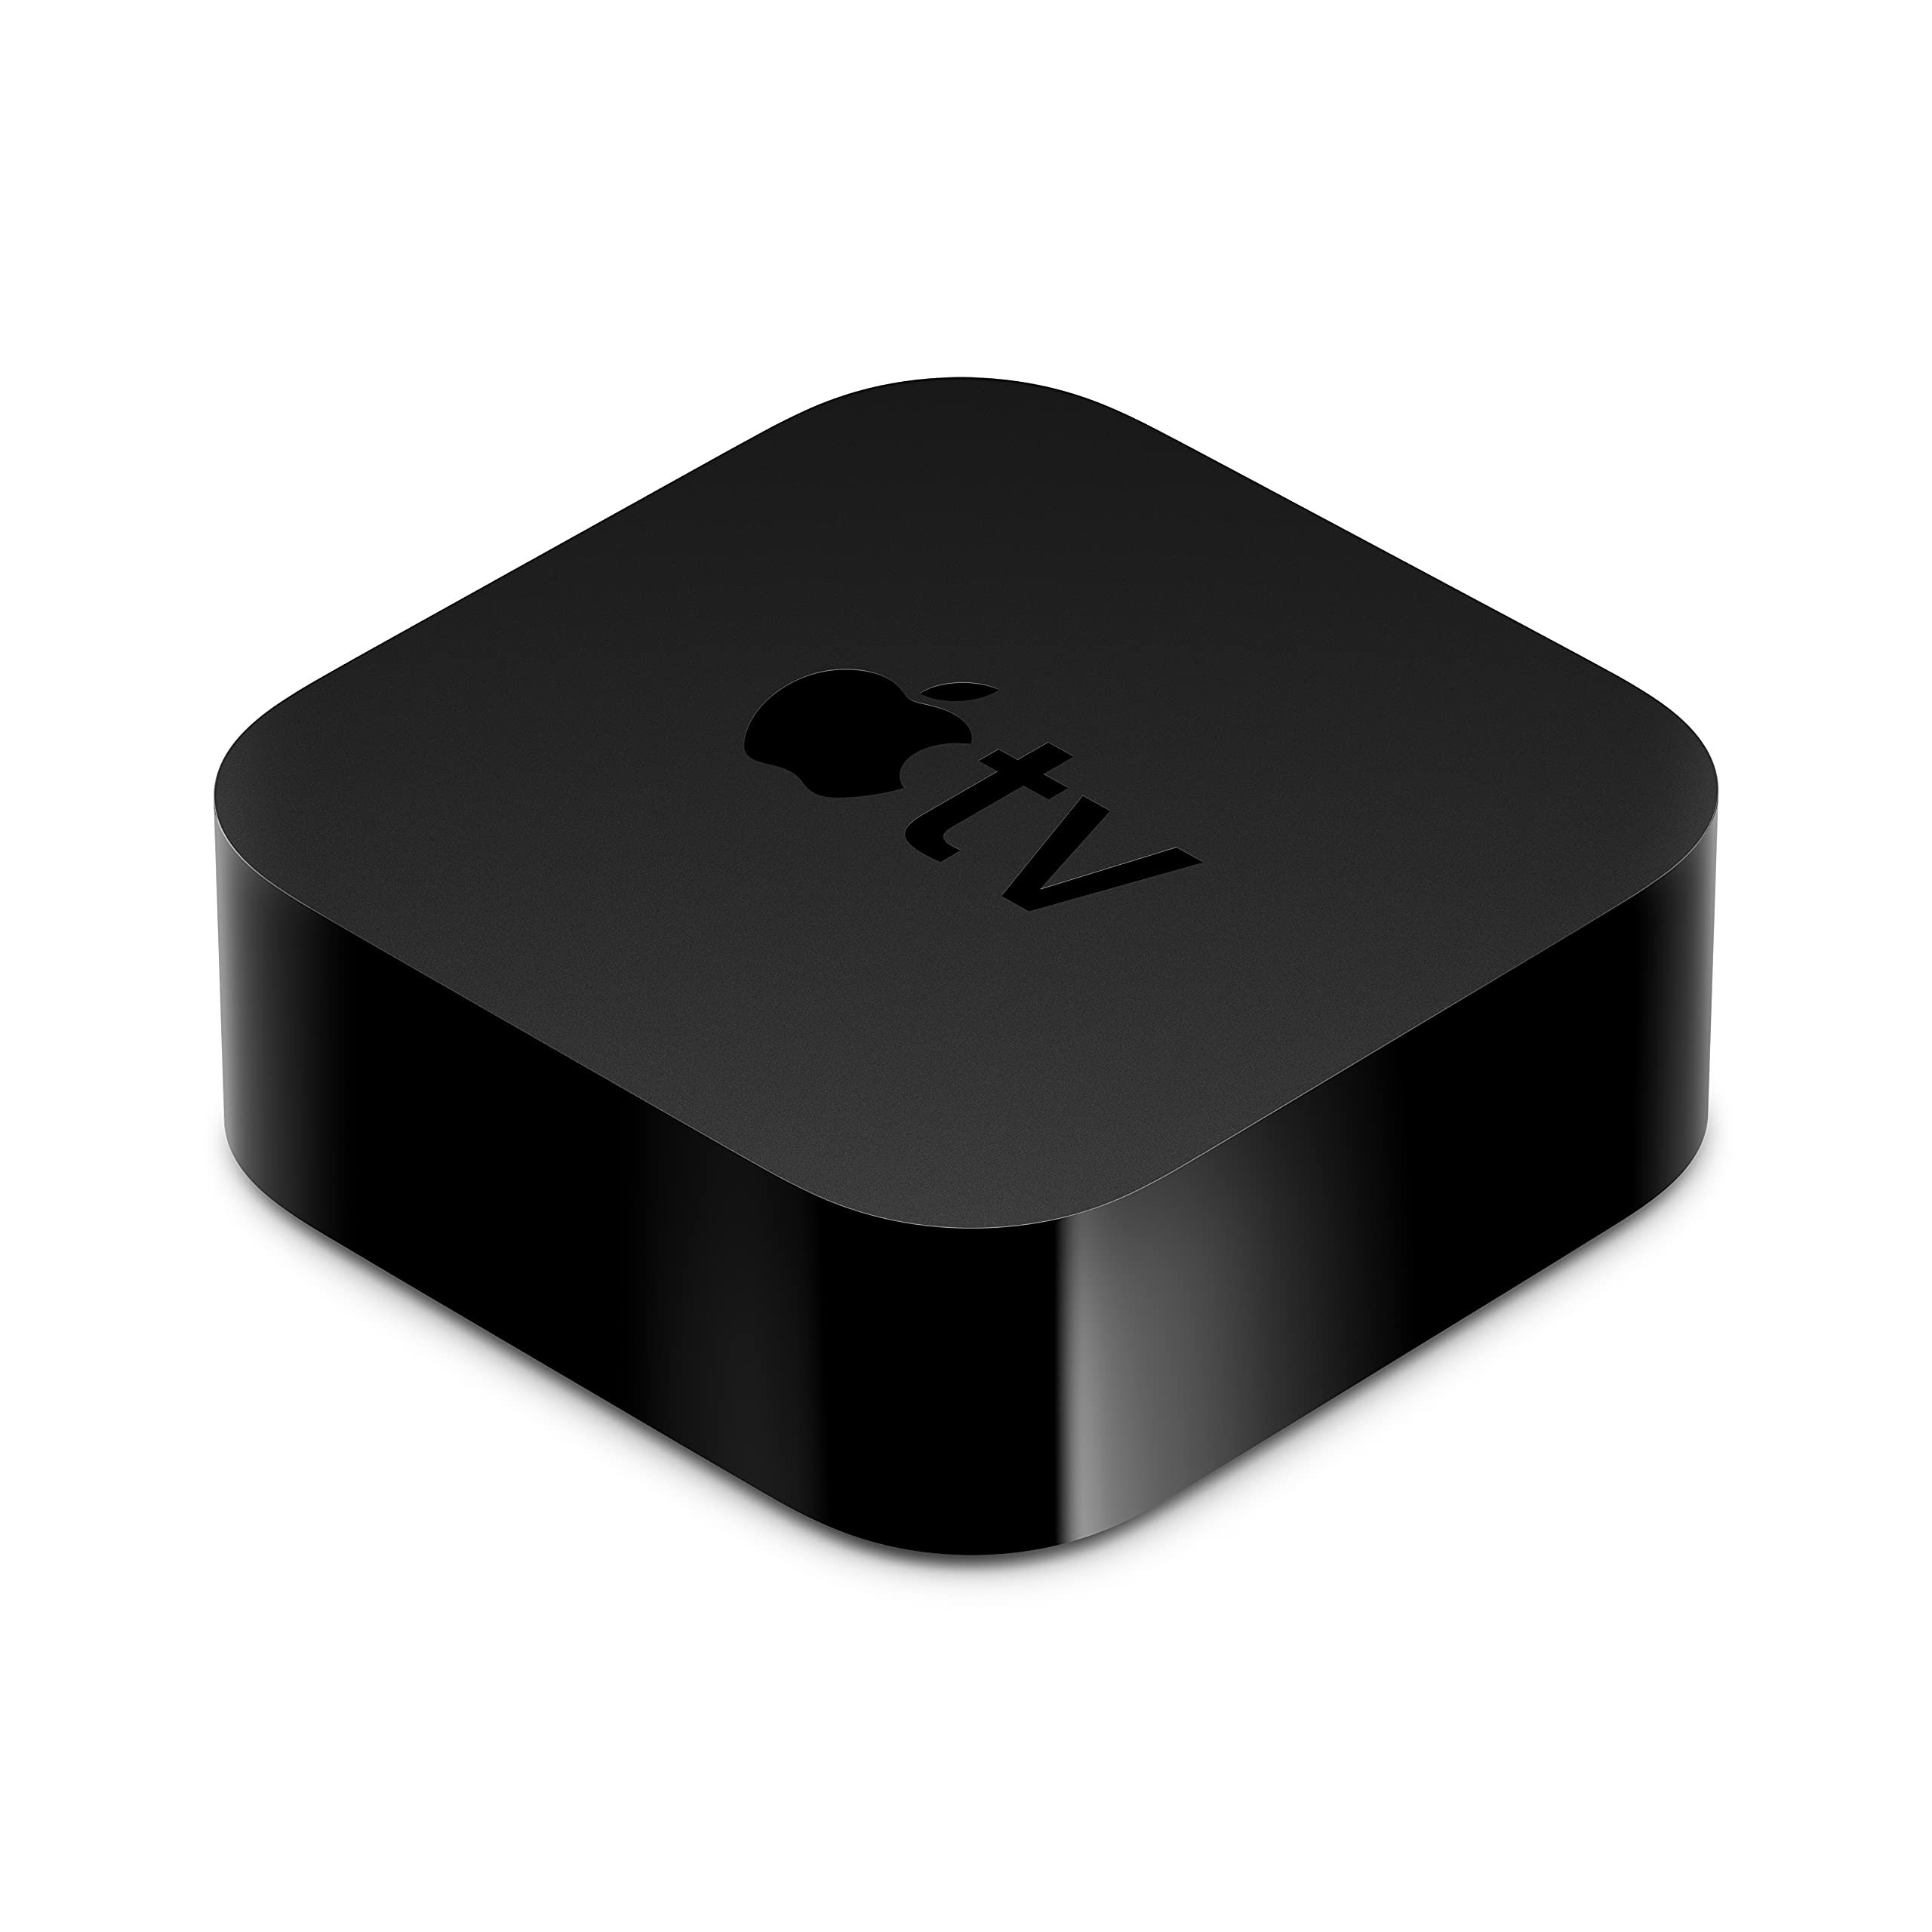 2021 Apple TV 4K with 64GB Storage (2nd Generation)